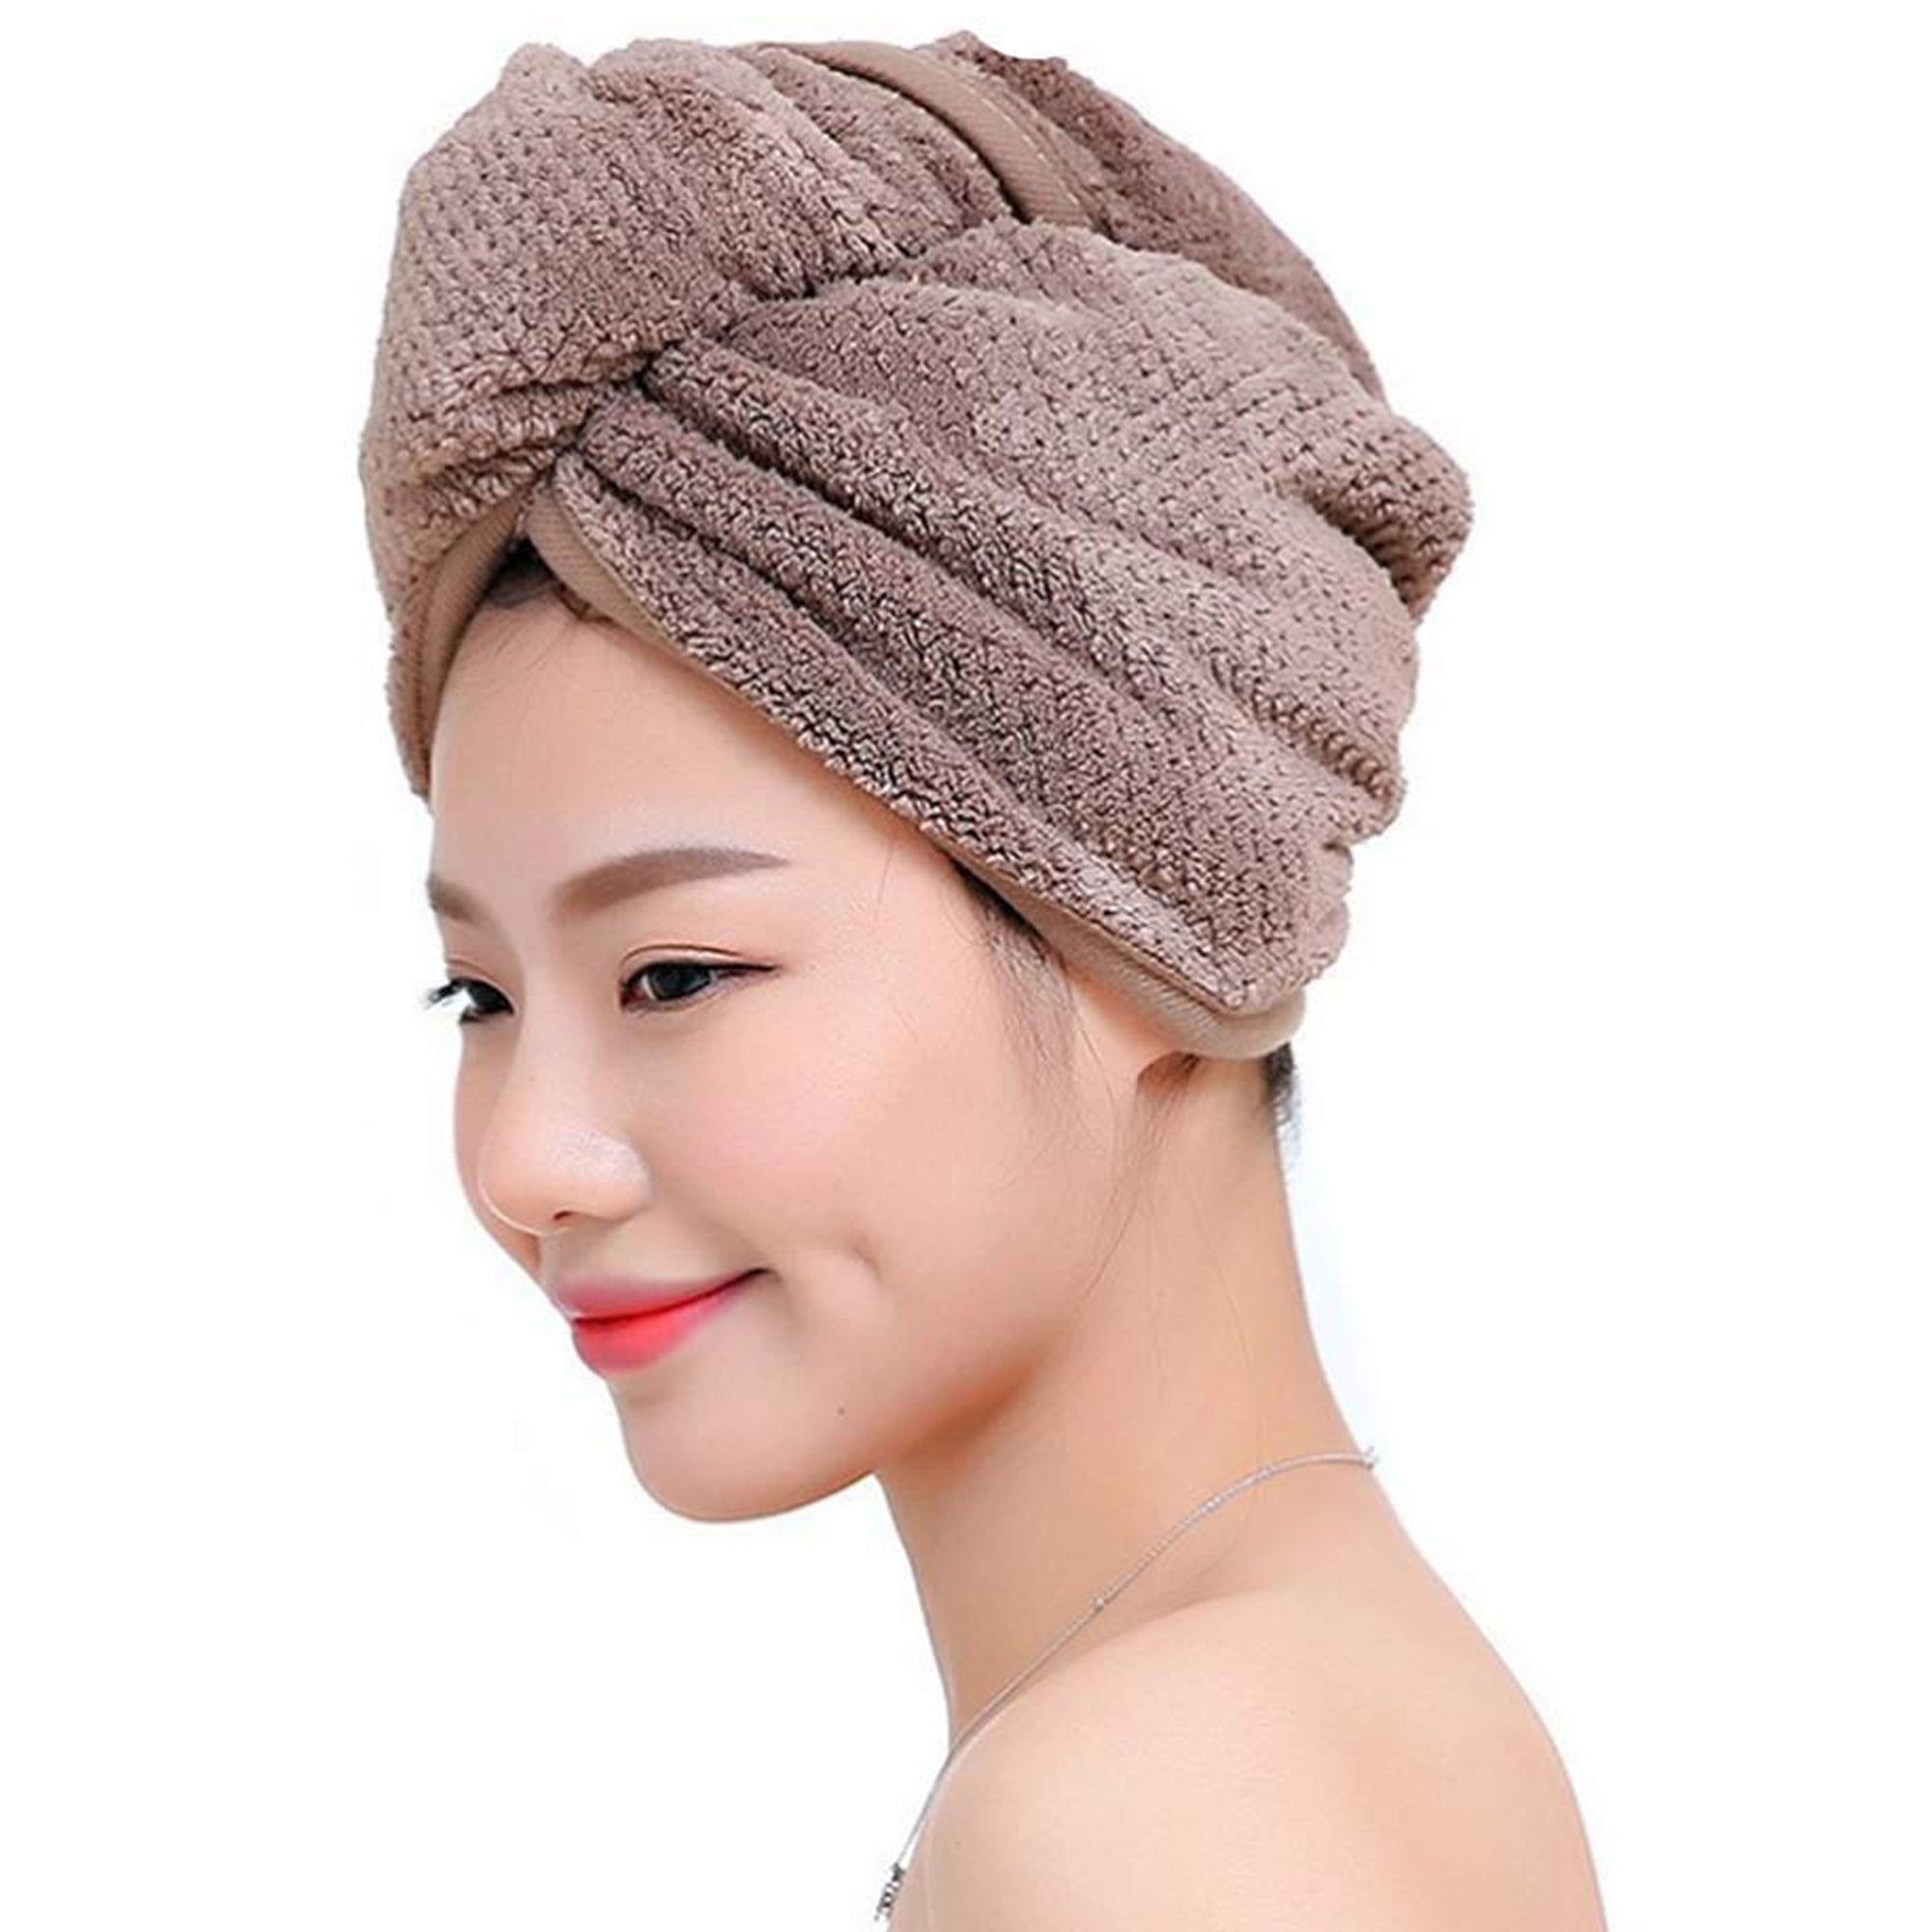 Microfiber Towel Quick Dry Magic Hair Drying Turban Bathing Spa Wrap Cap Ha E9O8 